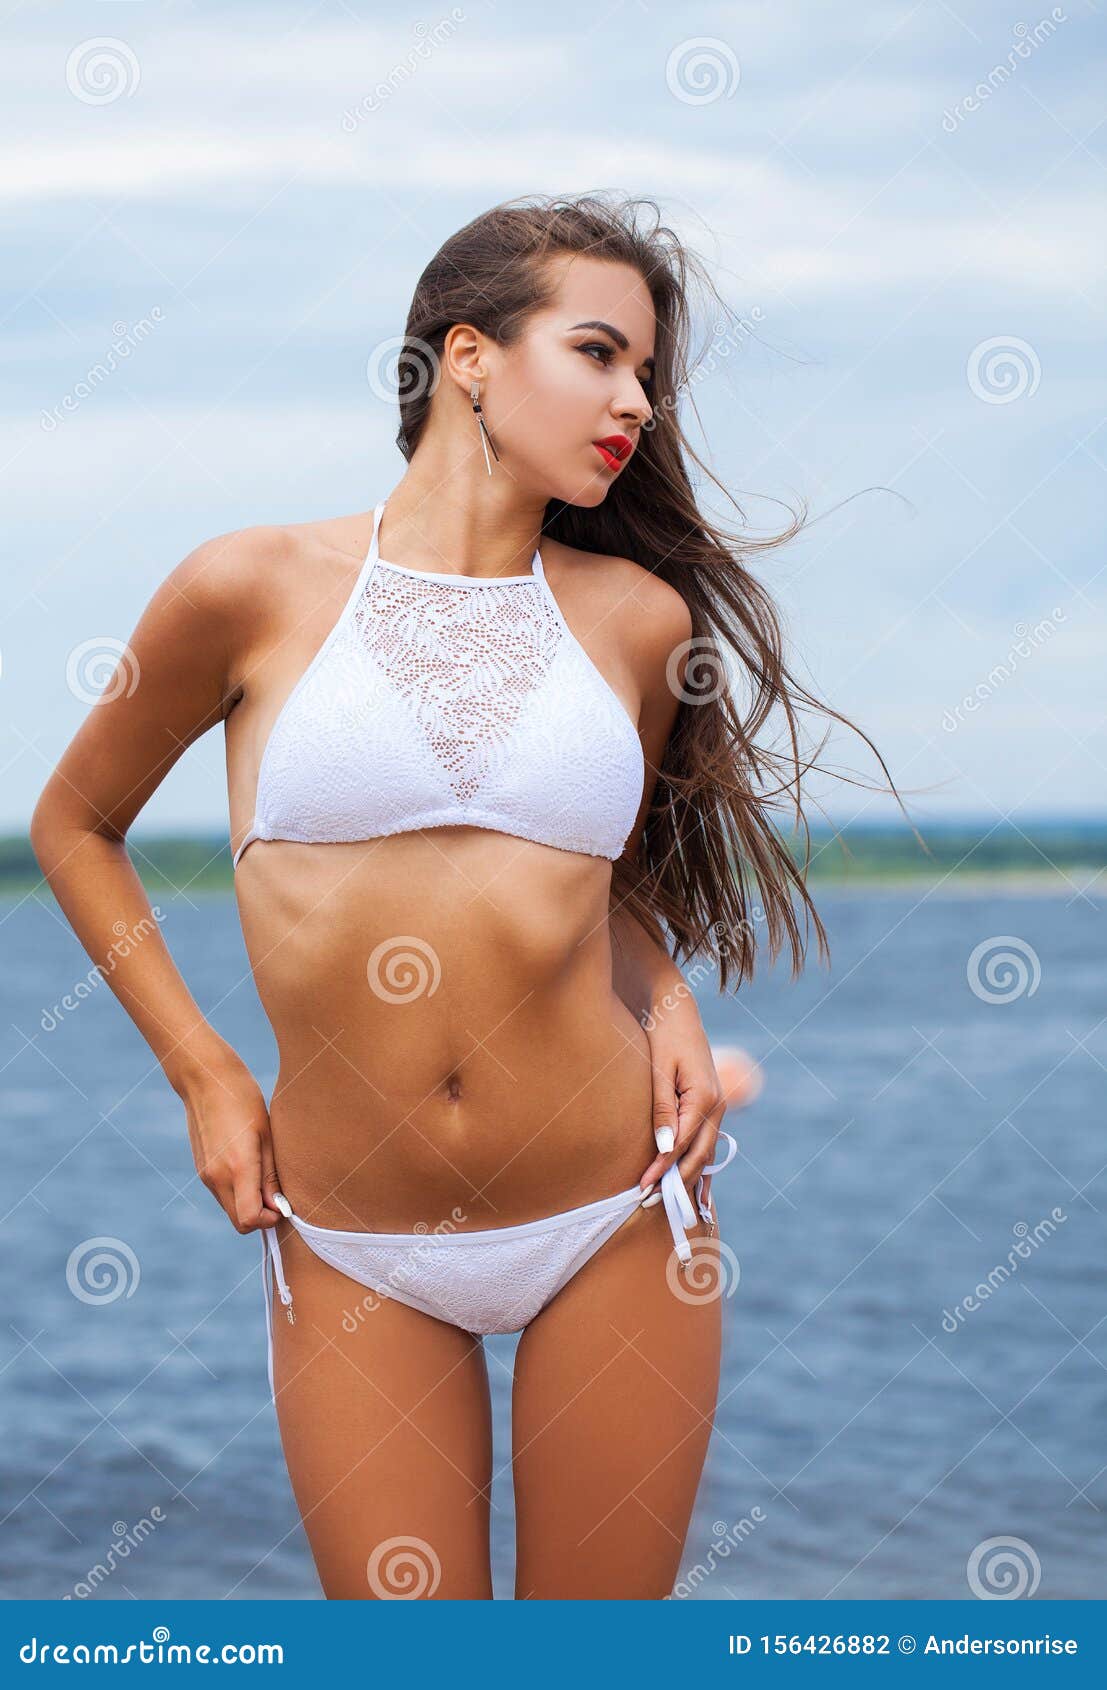 Women In White Bikini